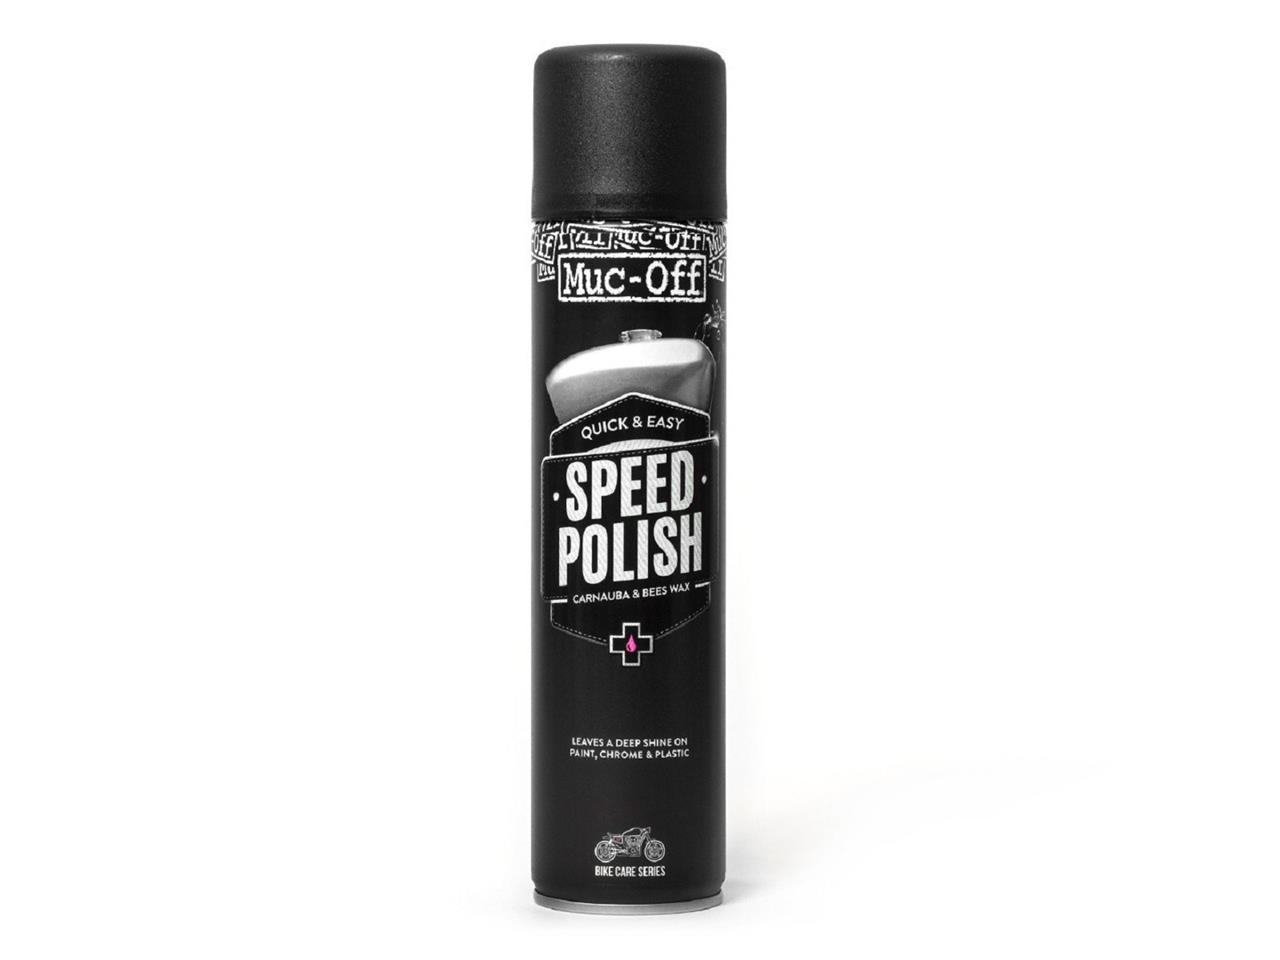 Spray Polish Muc-off Speed Polish 400ml